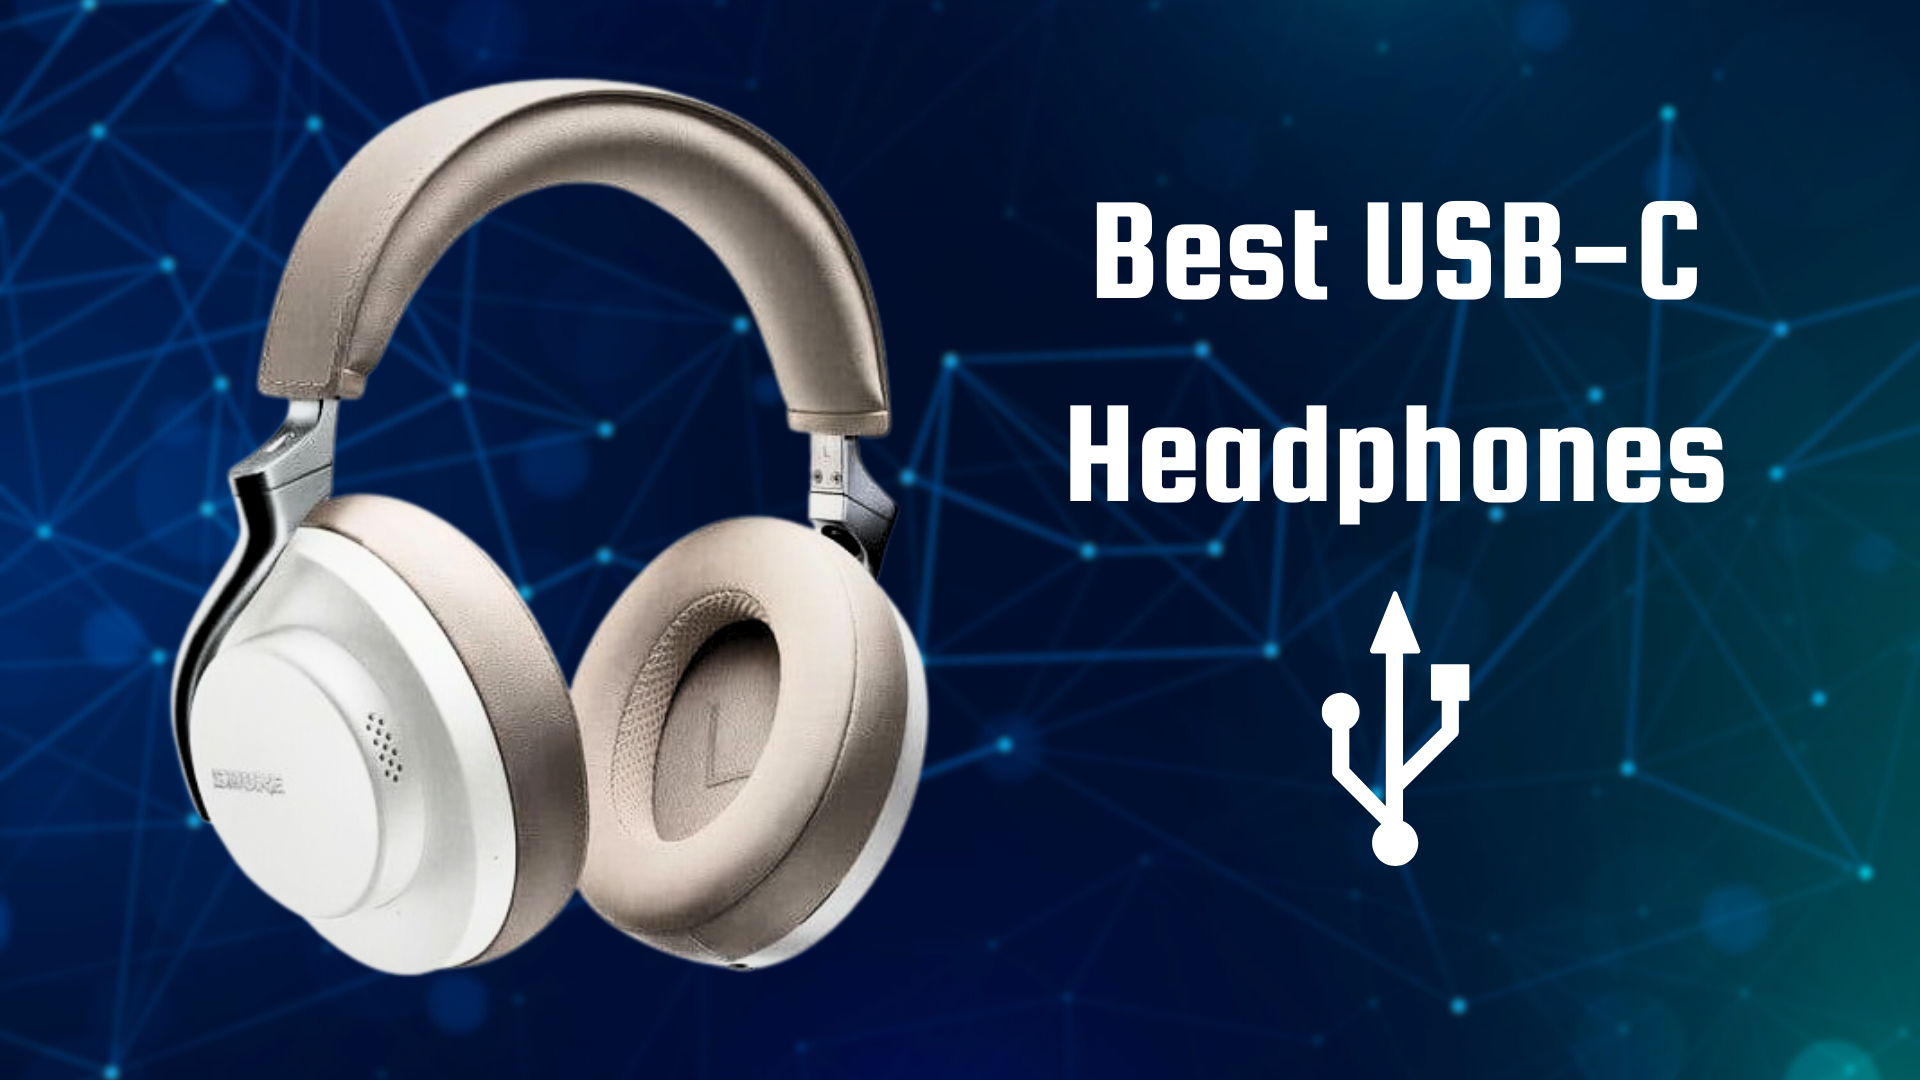 Best USB-C headphones